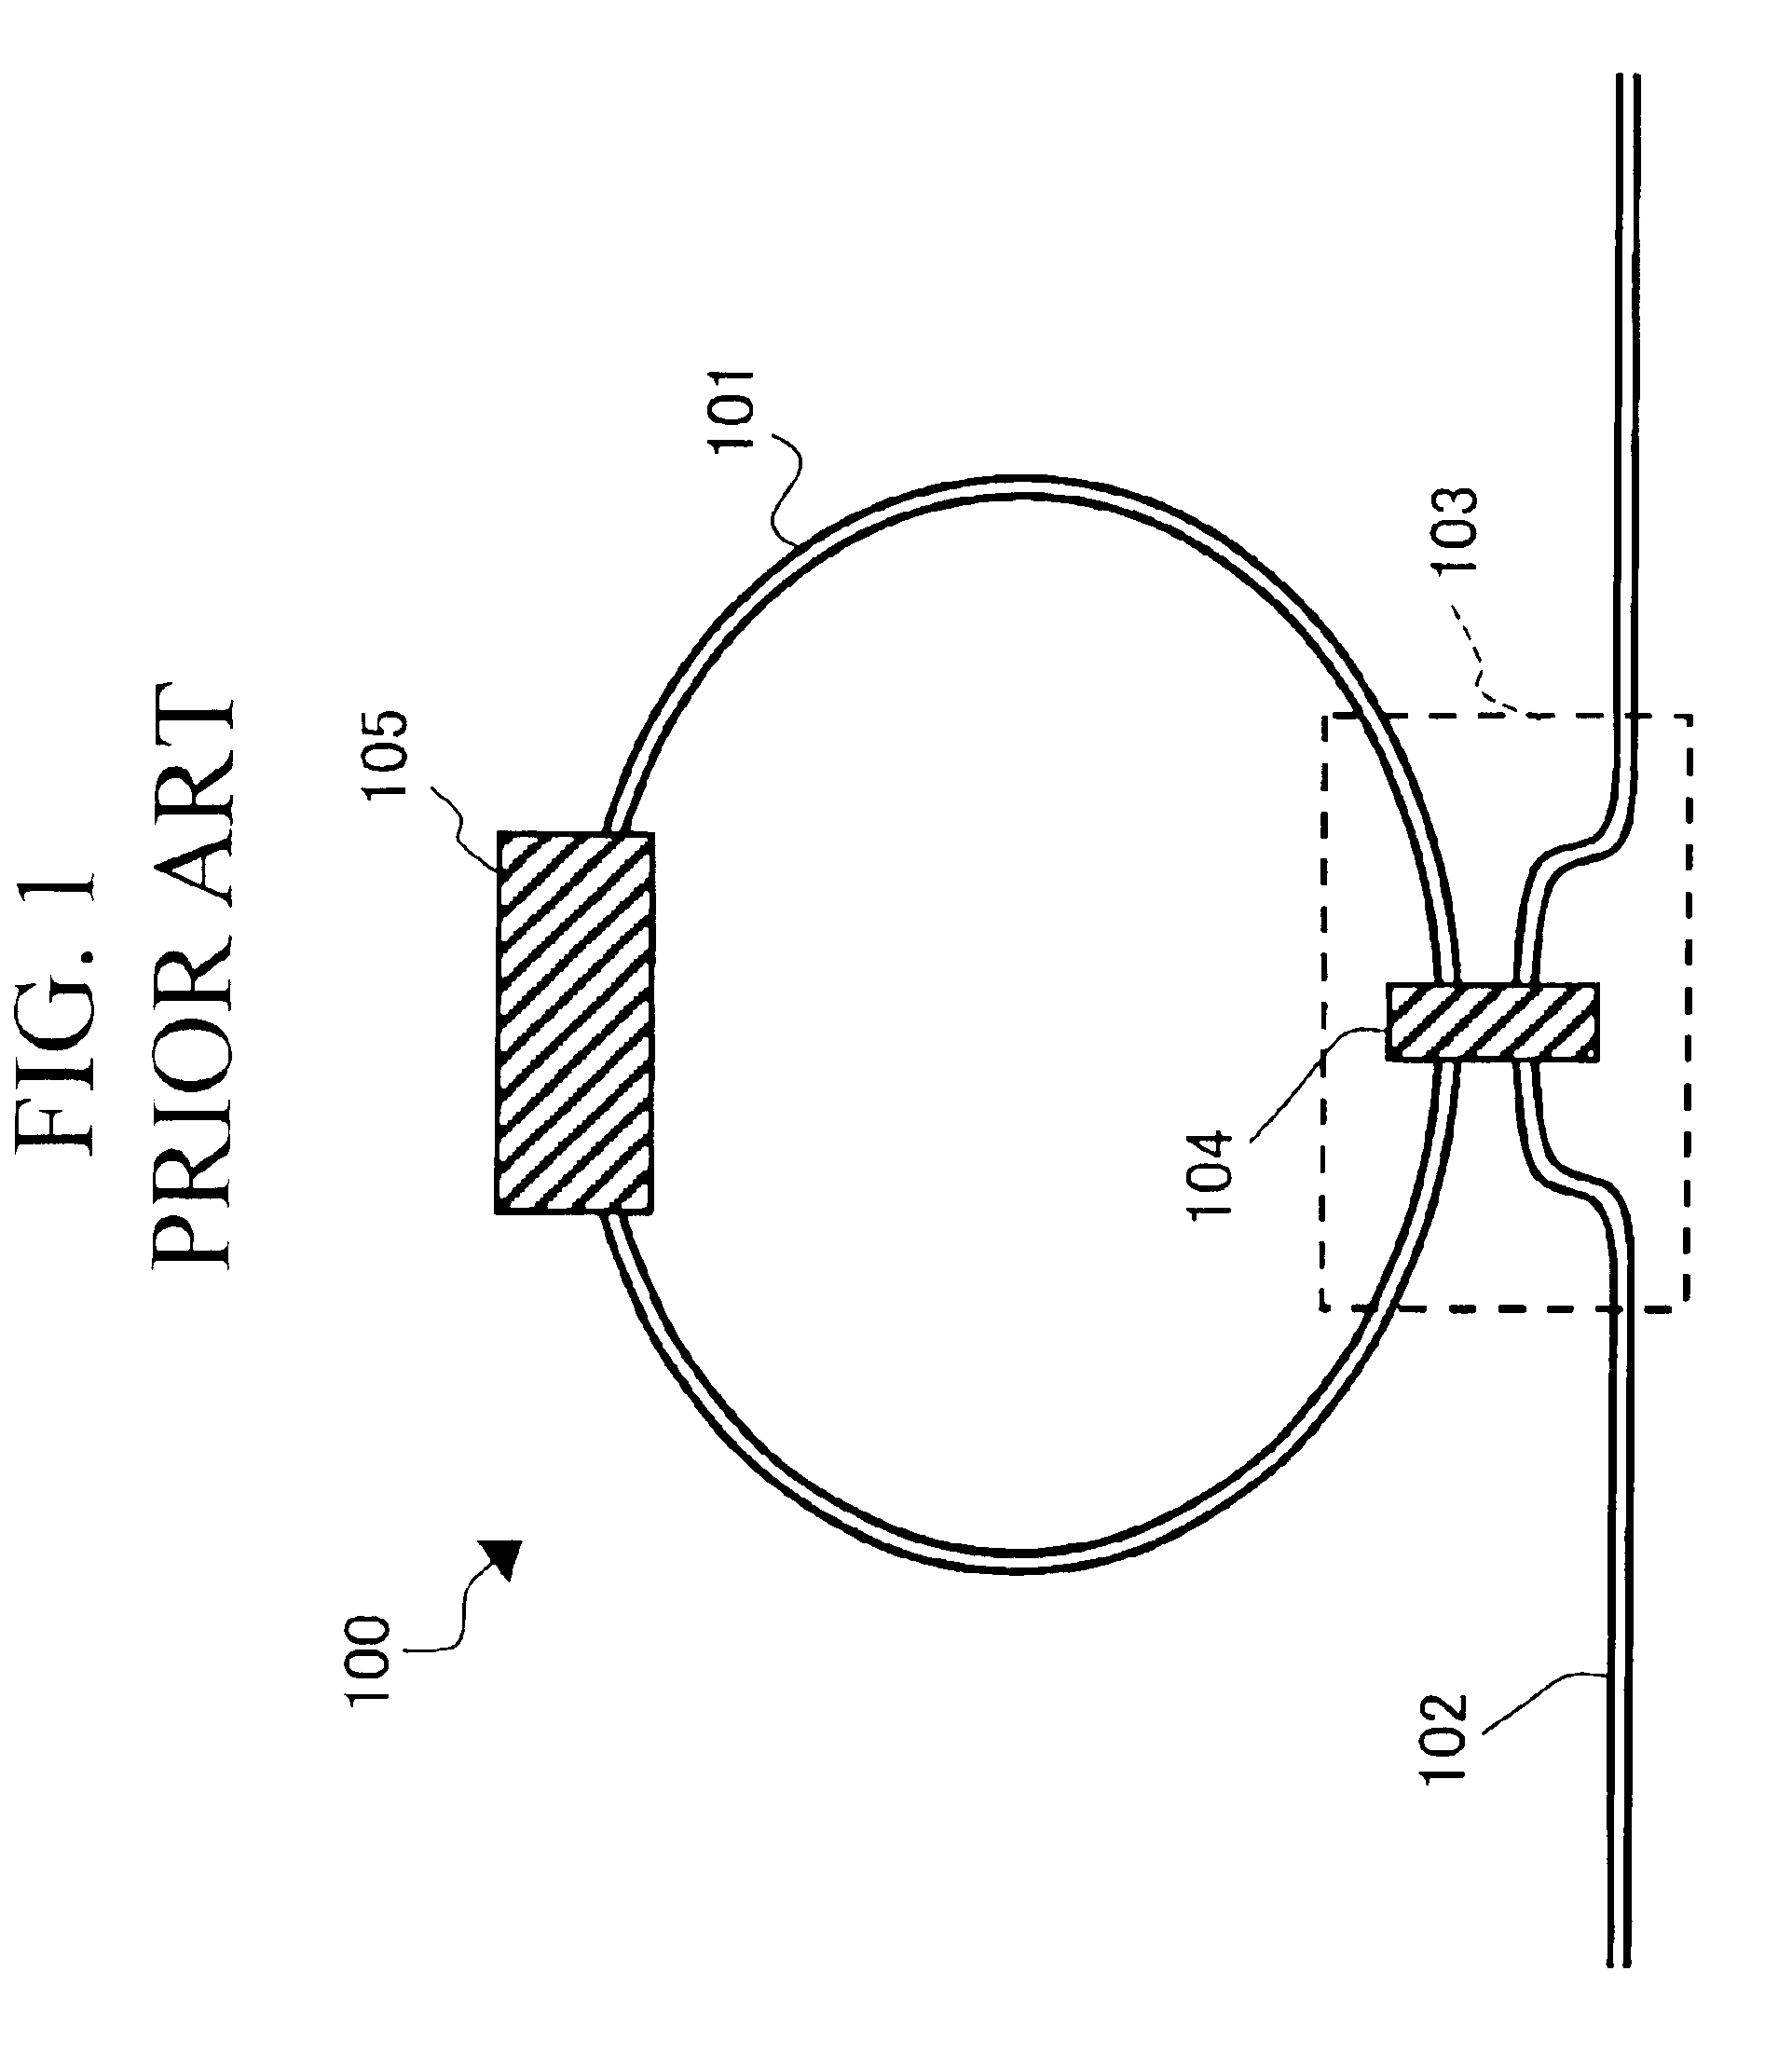 Optical resonator waveguide device and method of fabricating the same